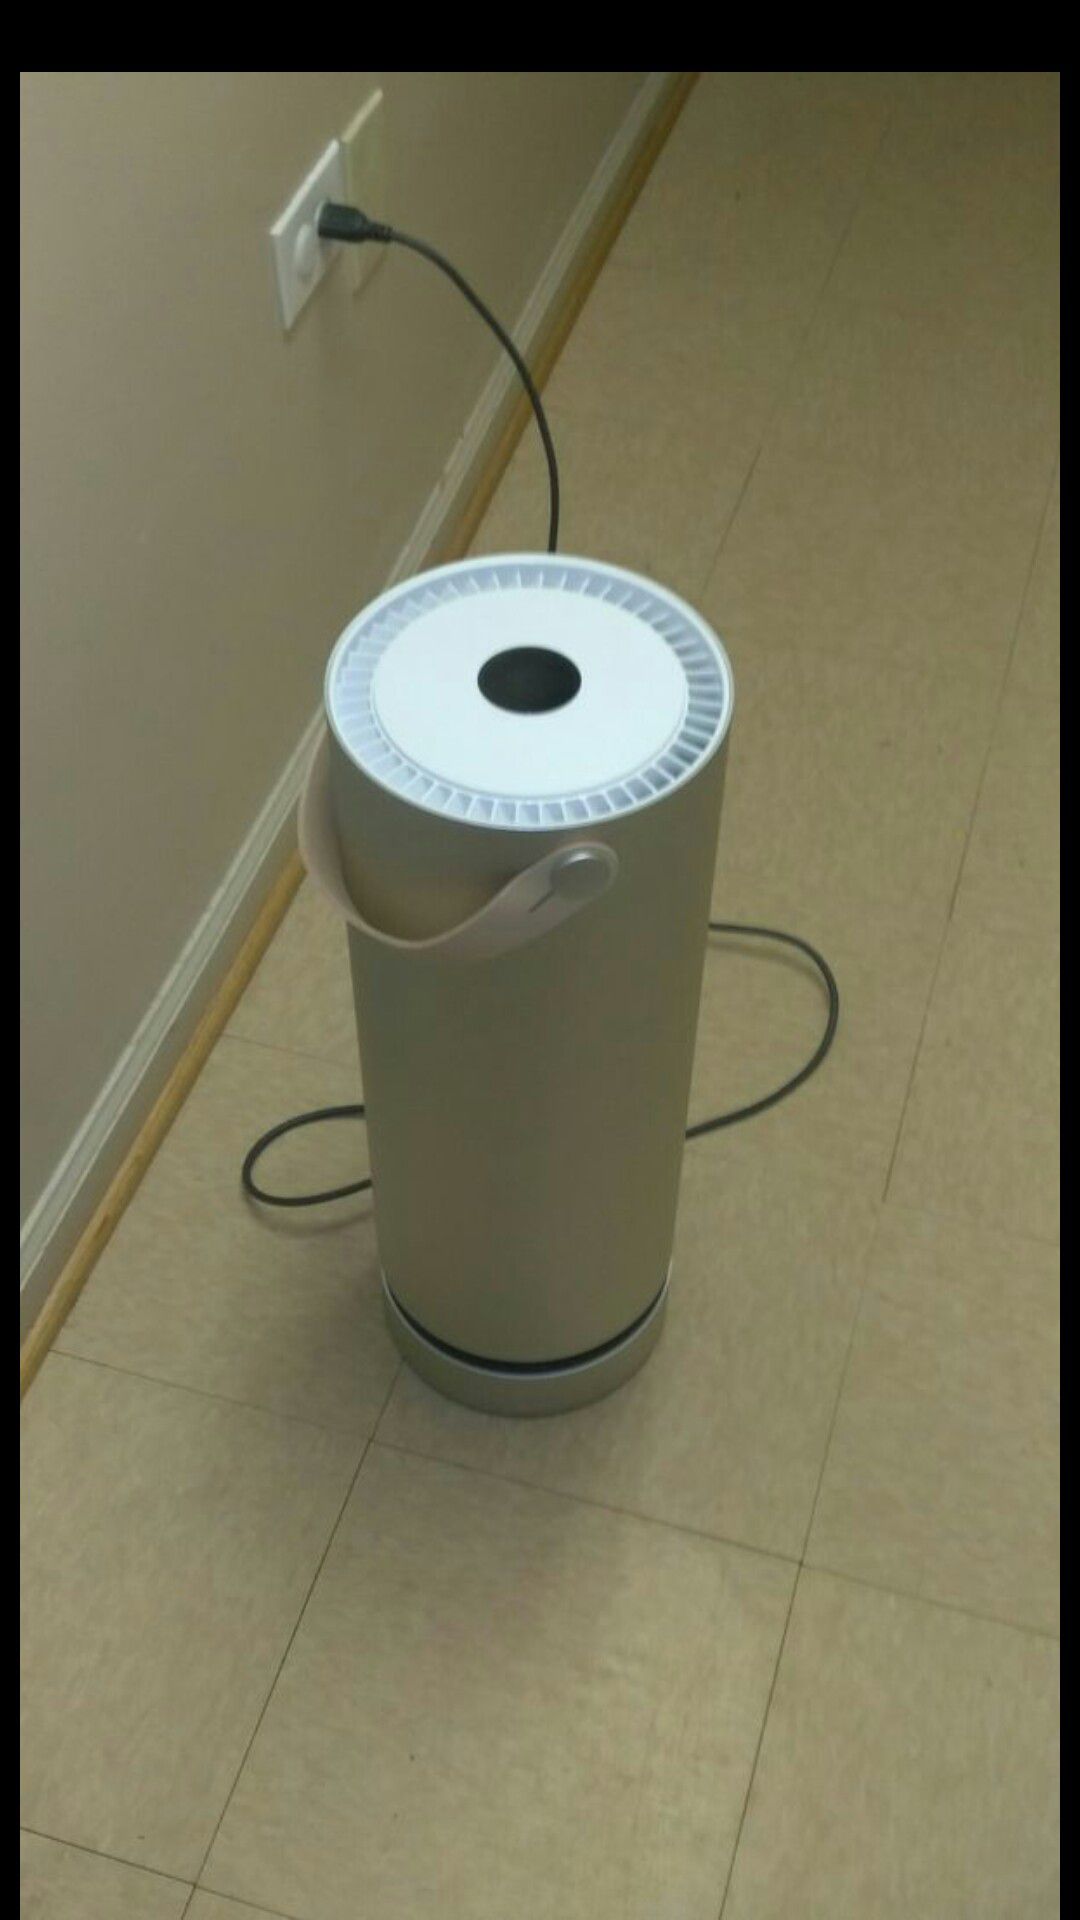 Household air filter/purifier